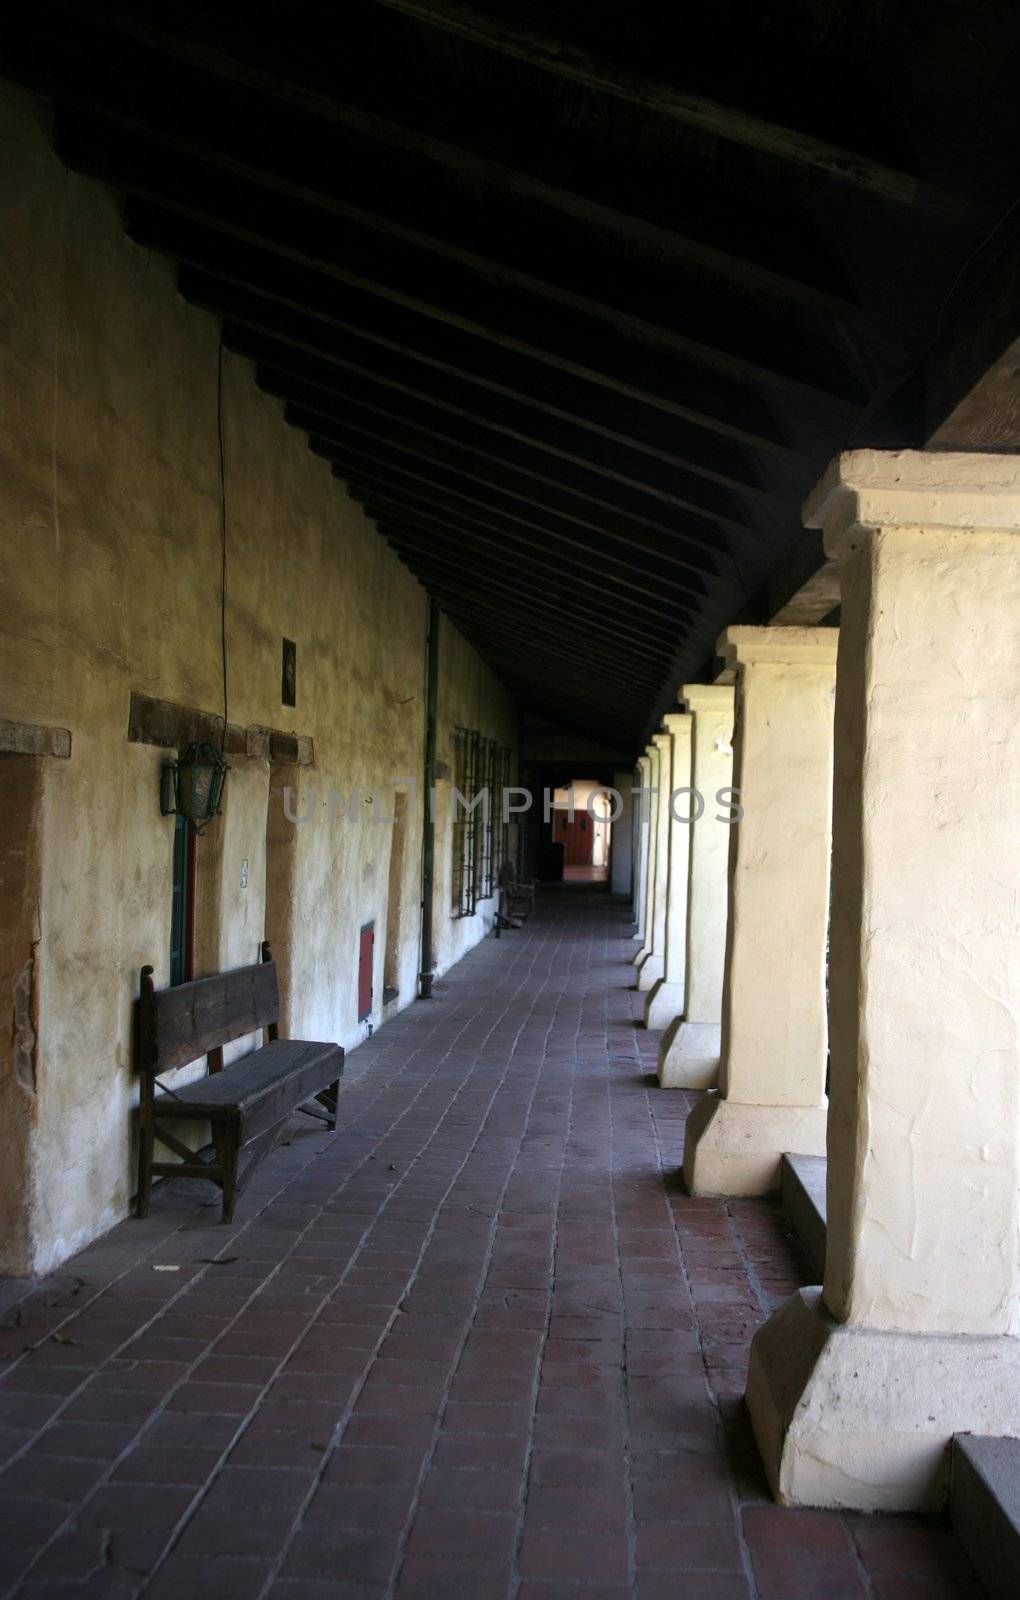 Covered walkway at the beautiful Santa Barbara Mission in California